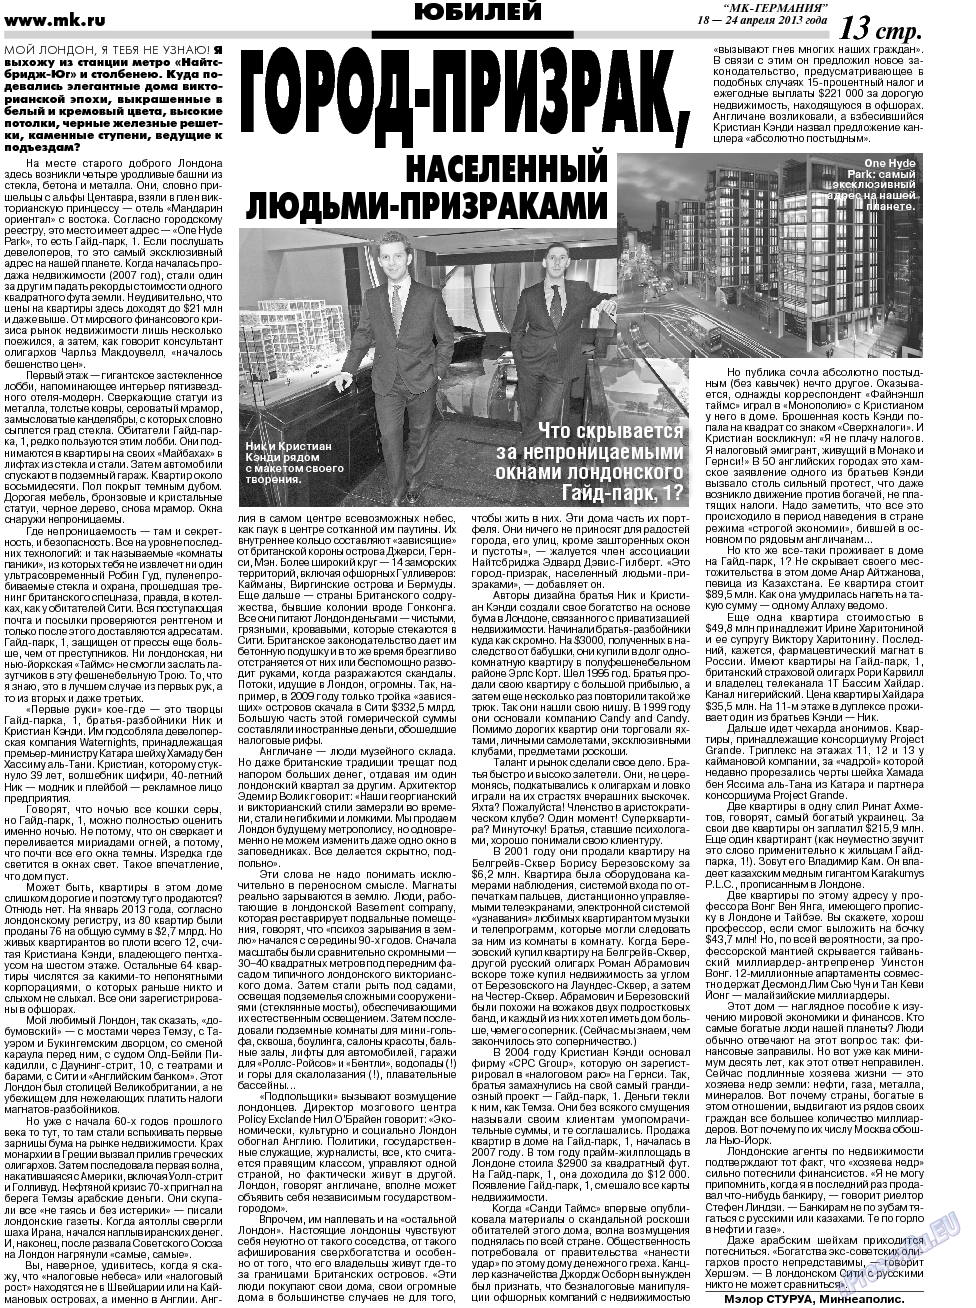 МК-Германия, газета. 2013 №16 стр.13